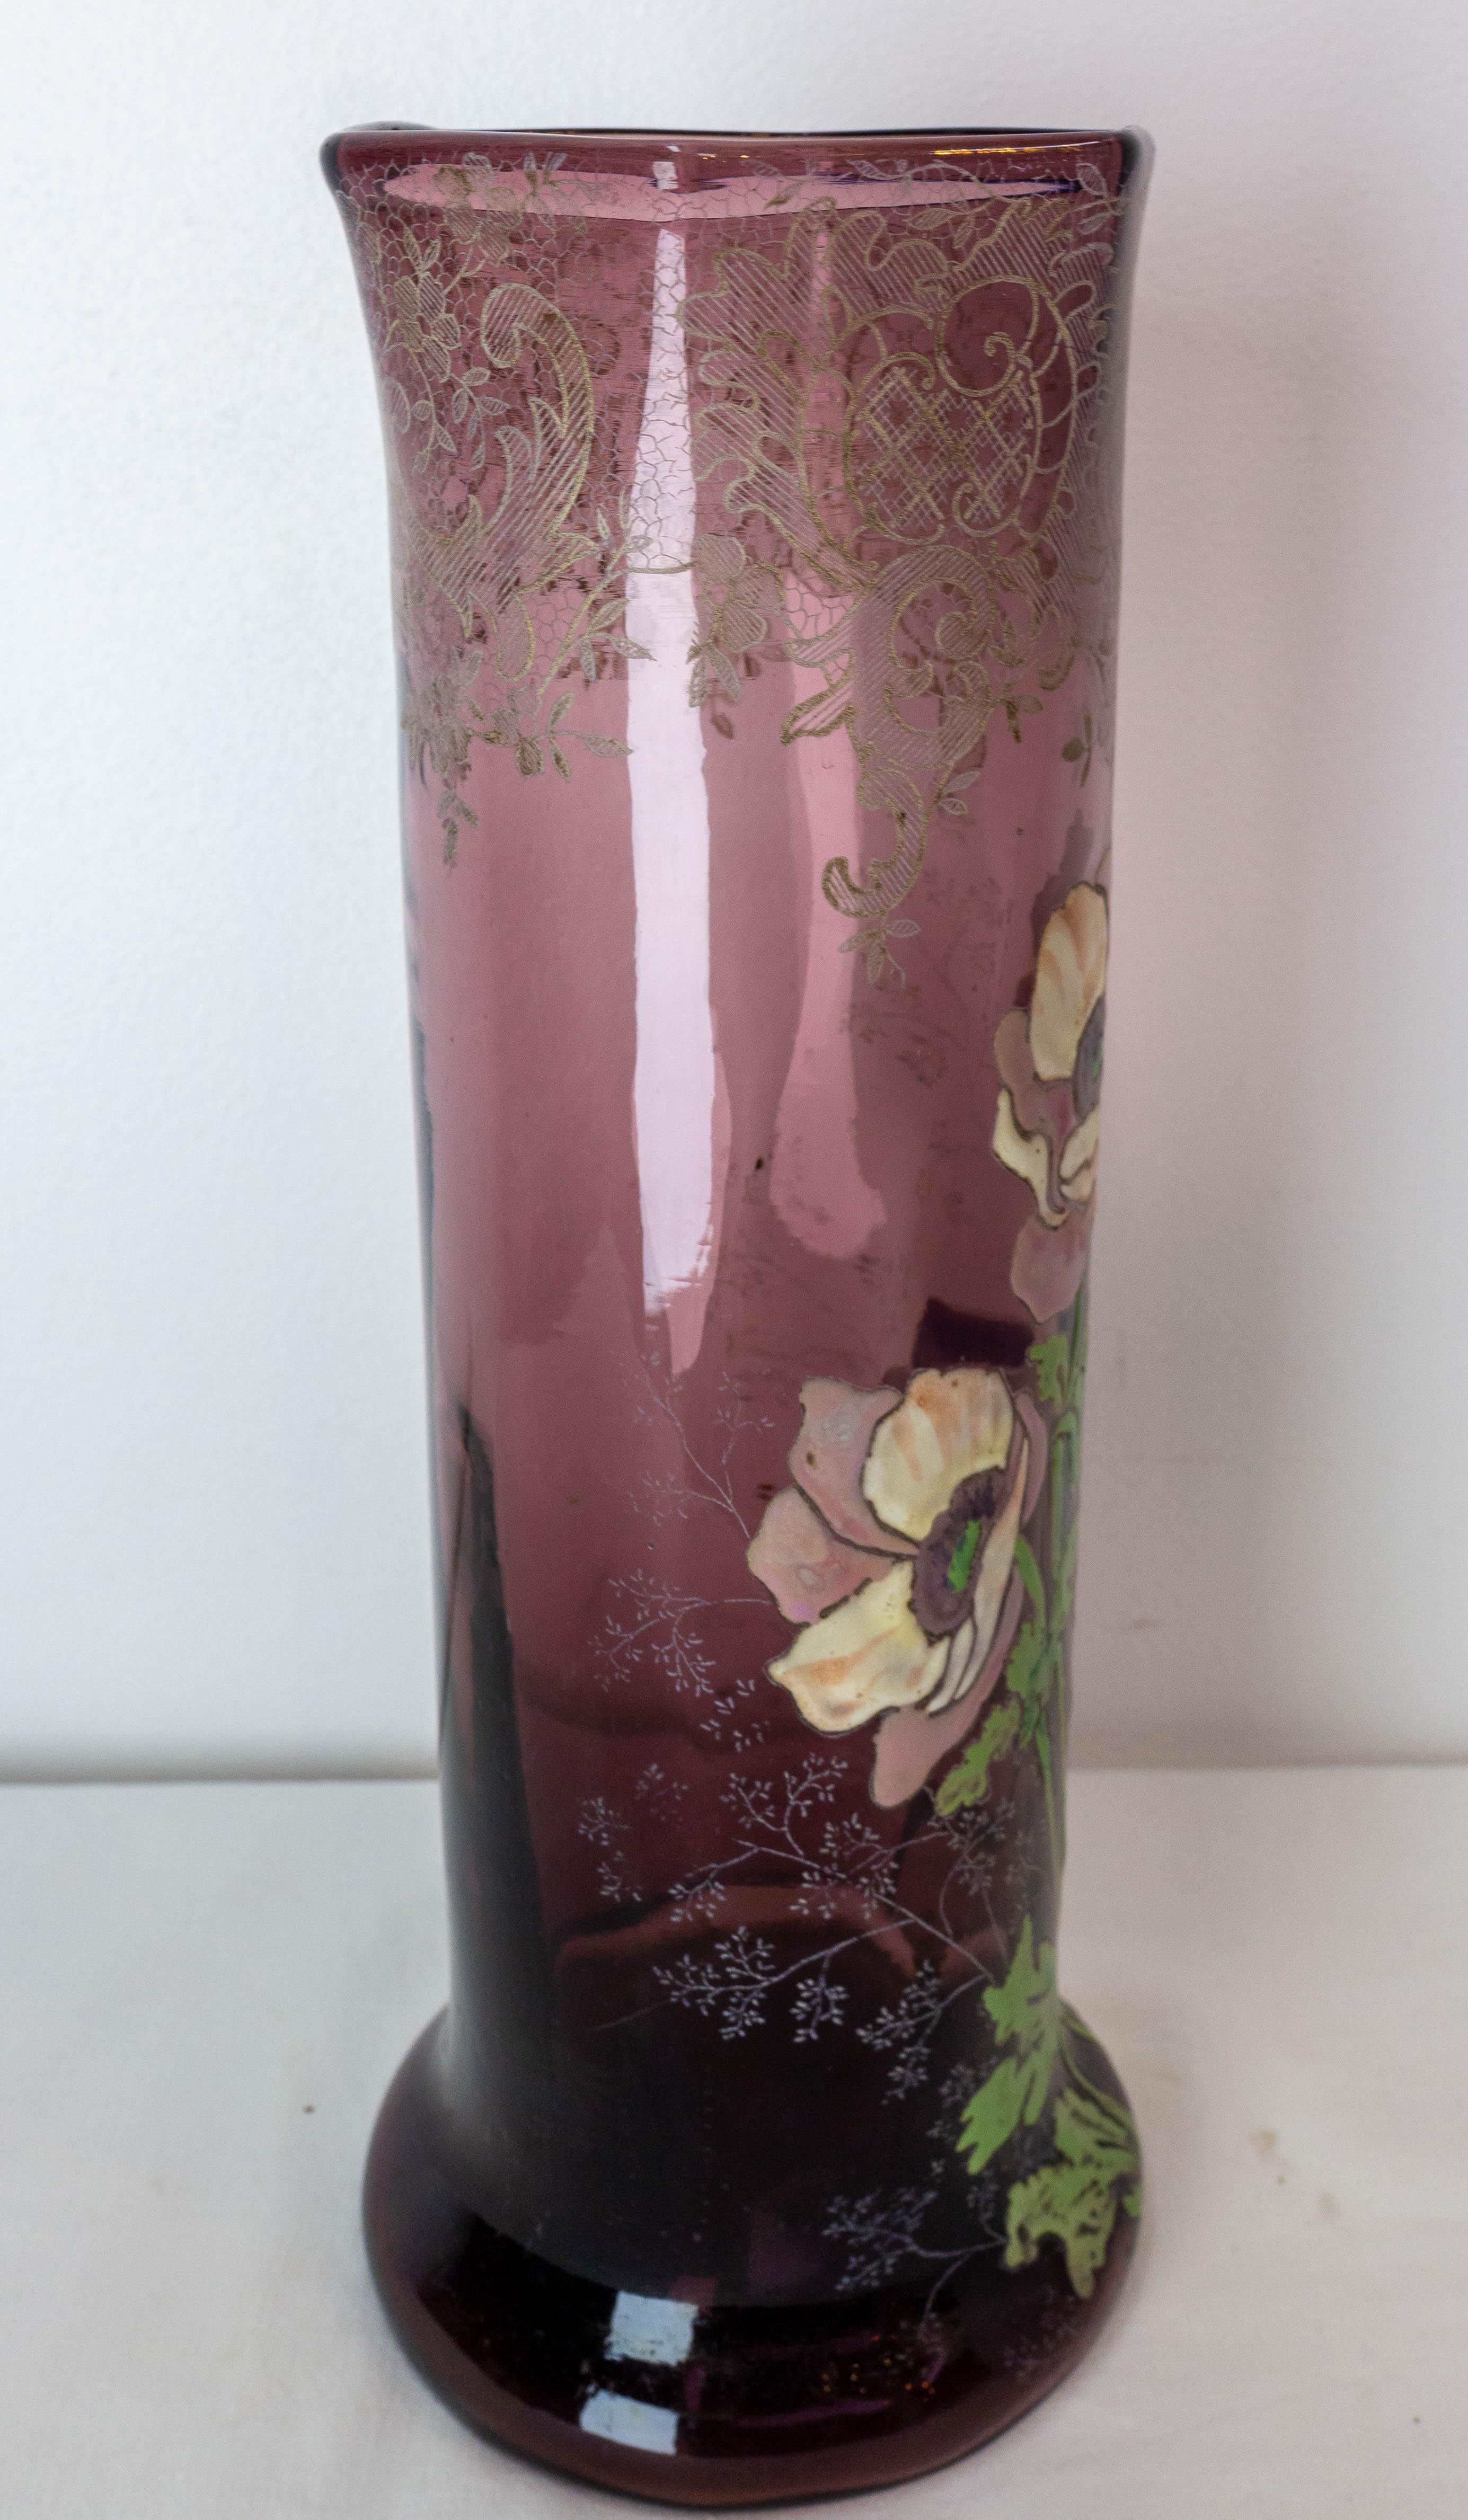 20th Century French Enamelled Glass Vase with Flowers Decoration Legras Art Nouveau, c. 1900 For Sale